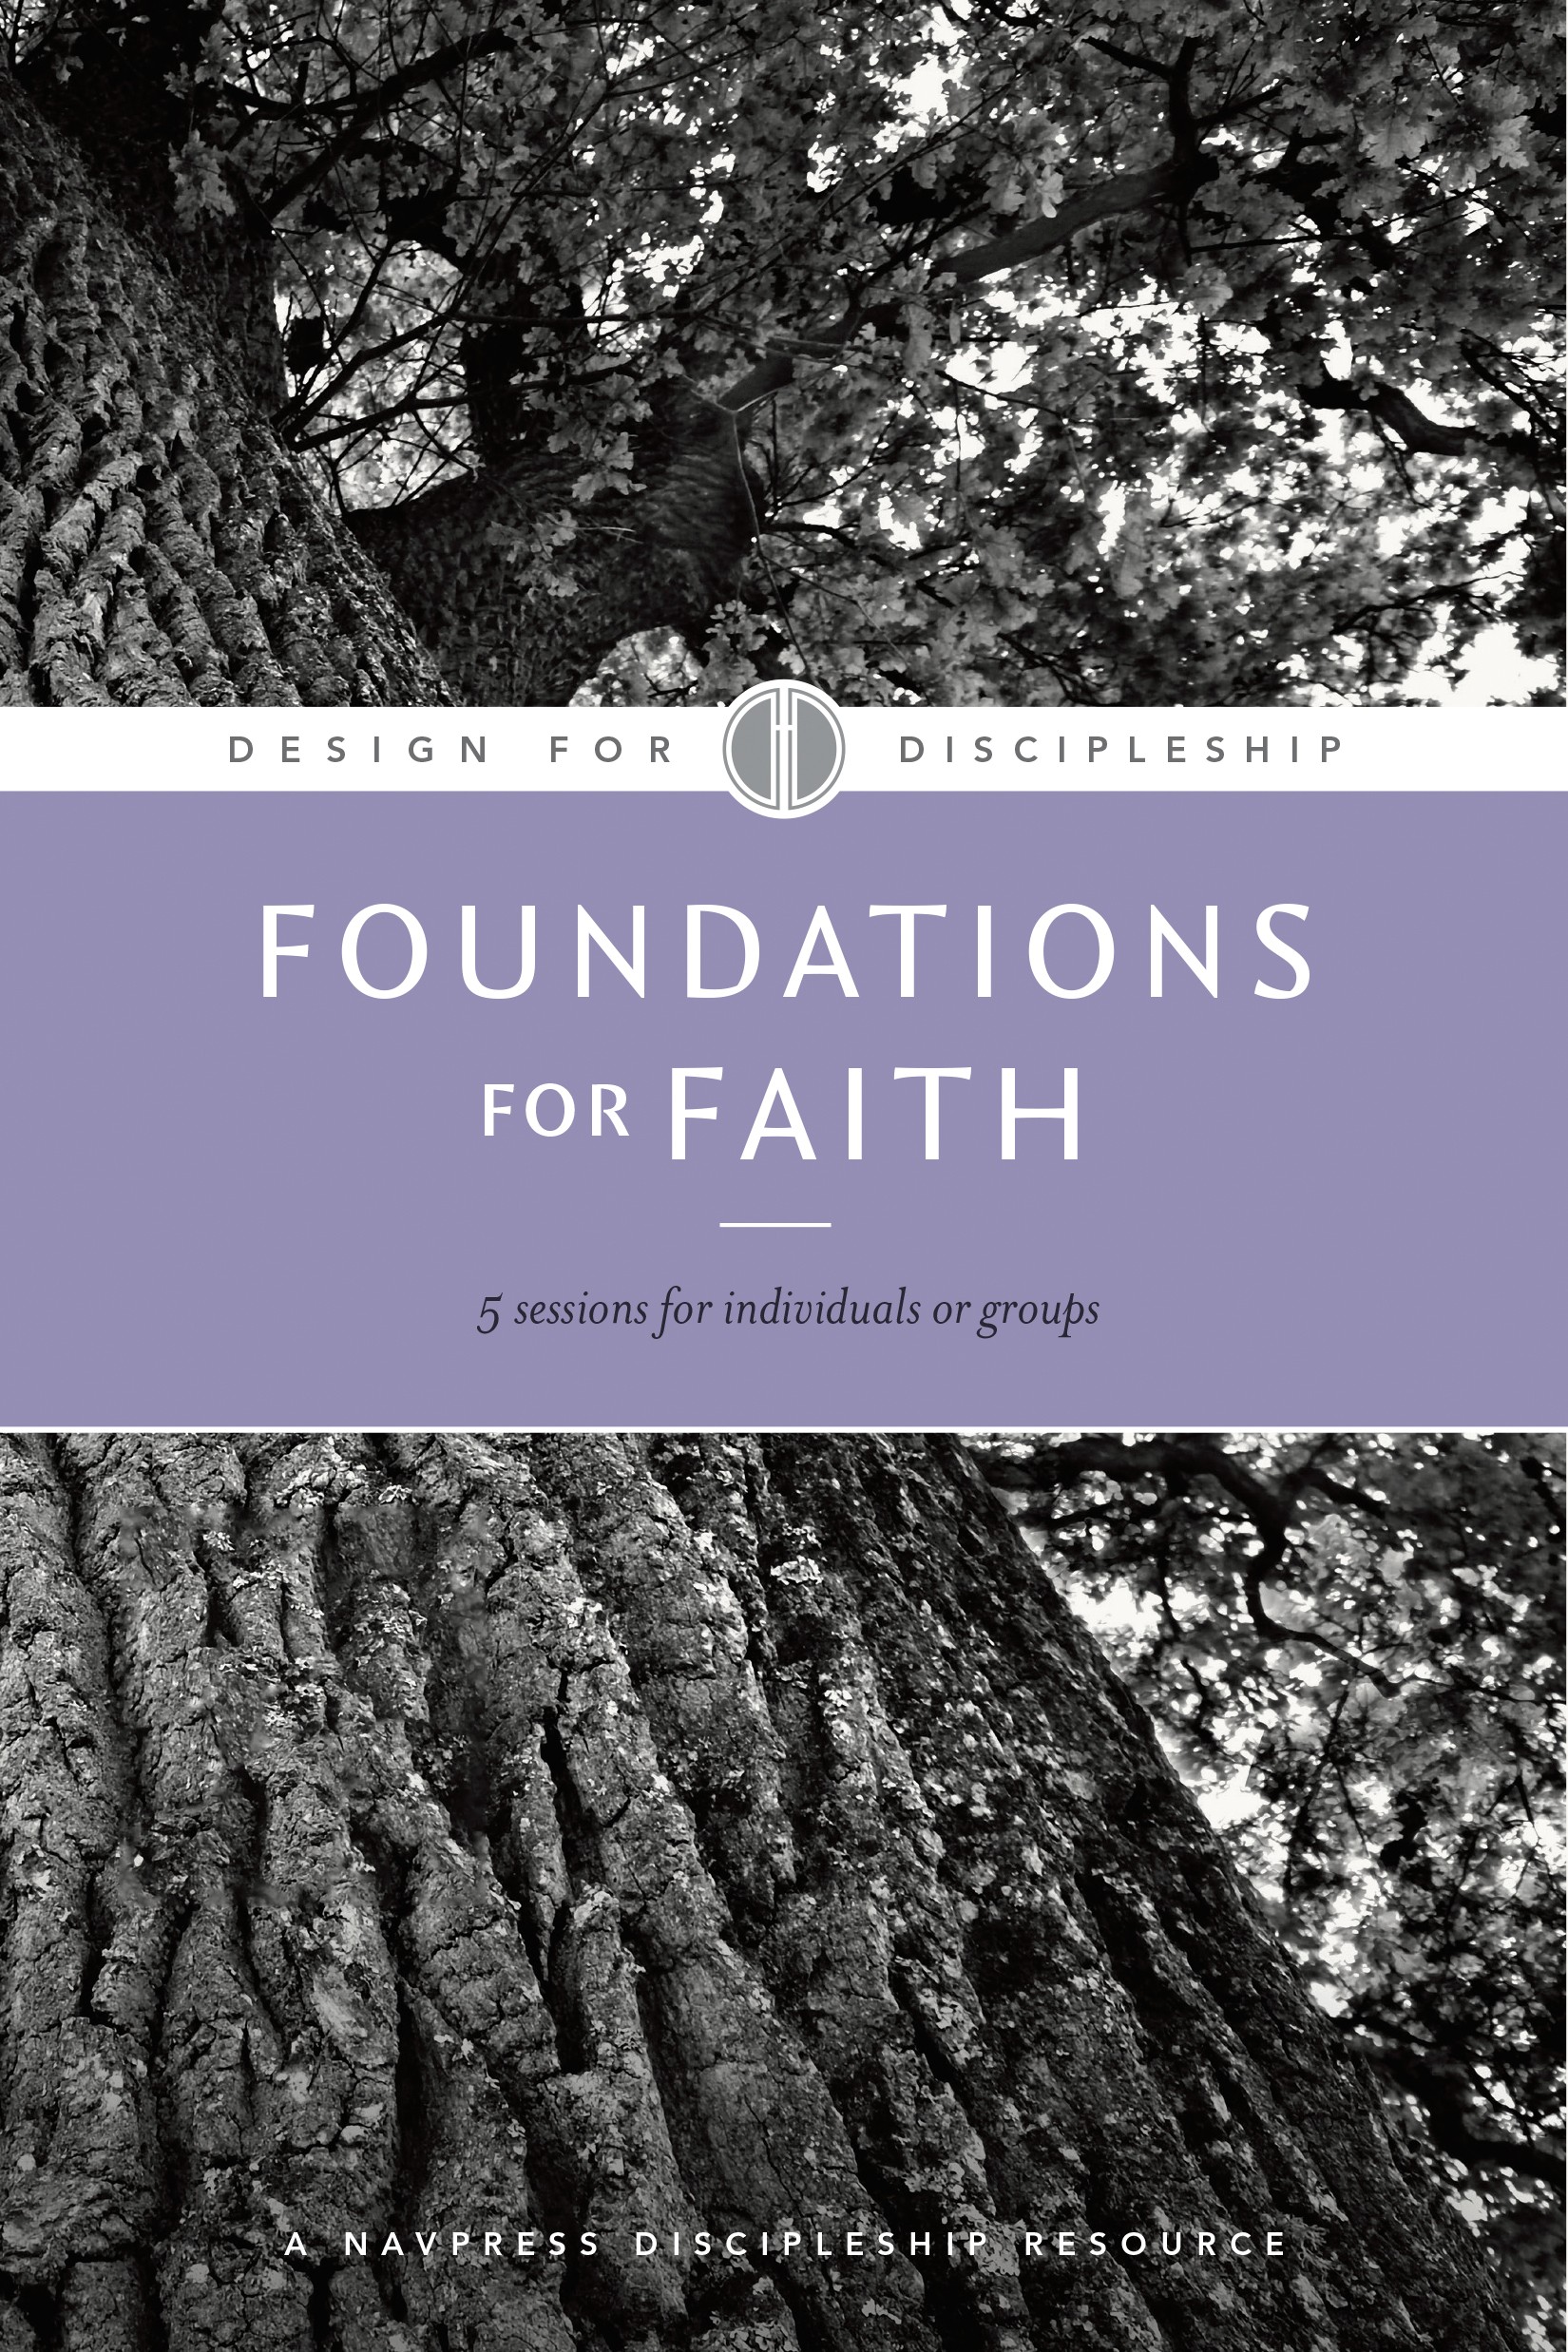 Estudio bíblico: Diseño para el discipulado: Design for Discipleship:  Foundations for Faith